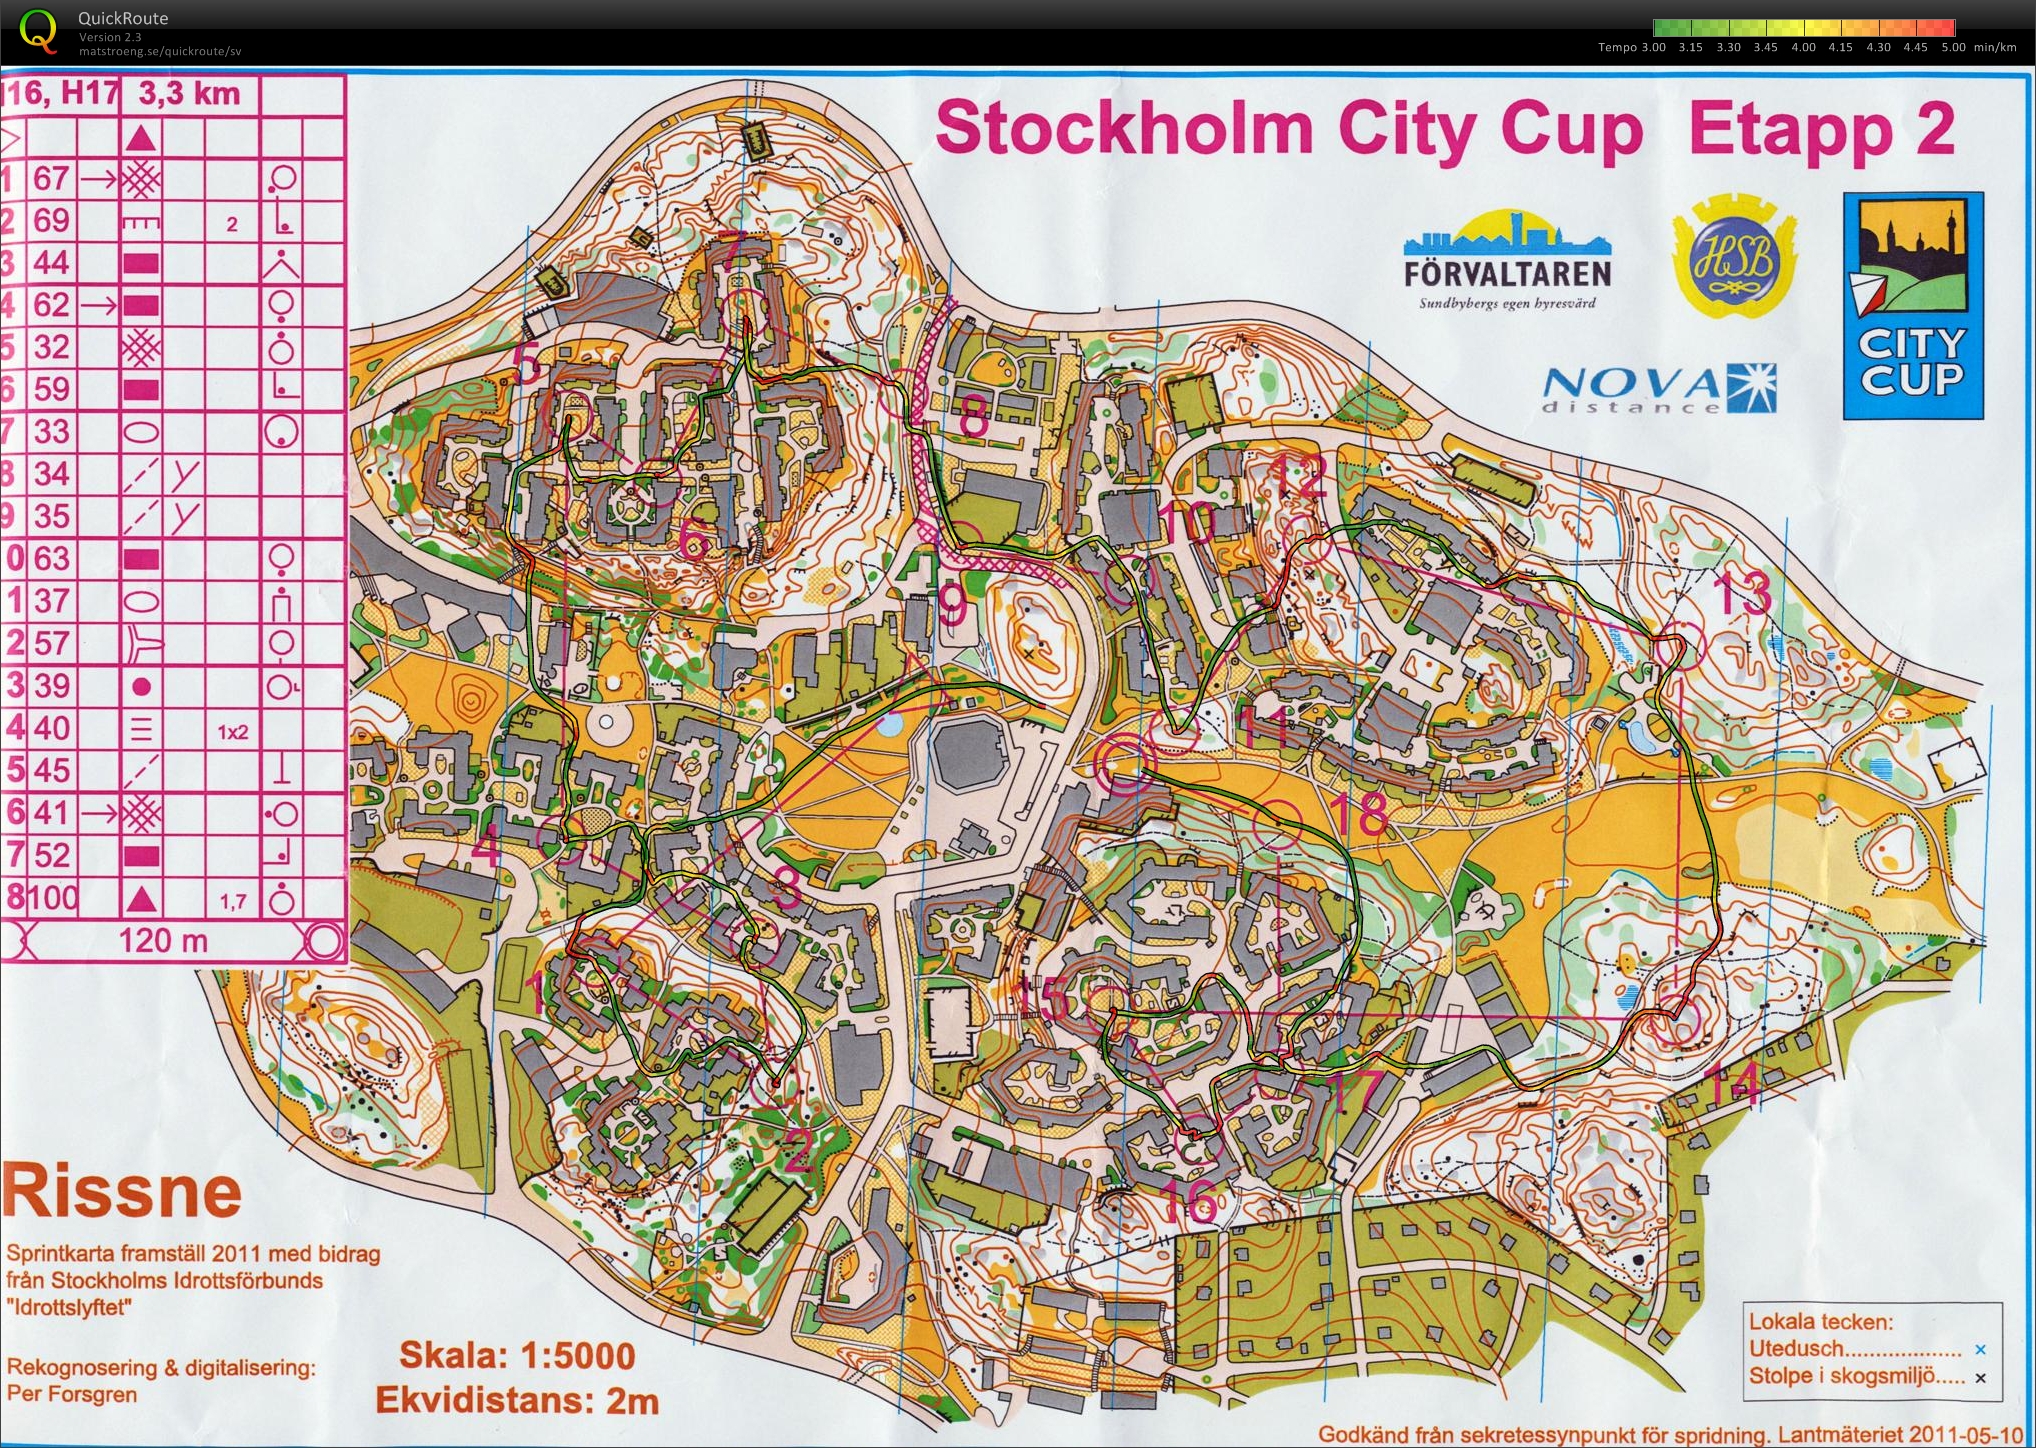 Stockholm City Cup etapp 2 (2011-05-18)